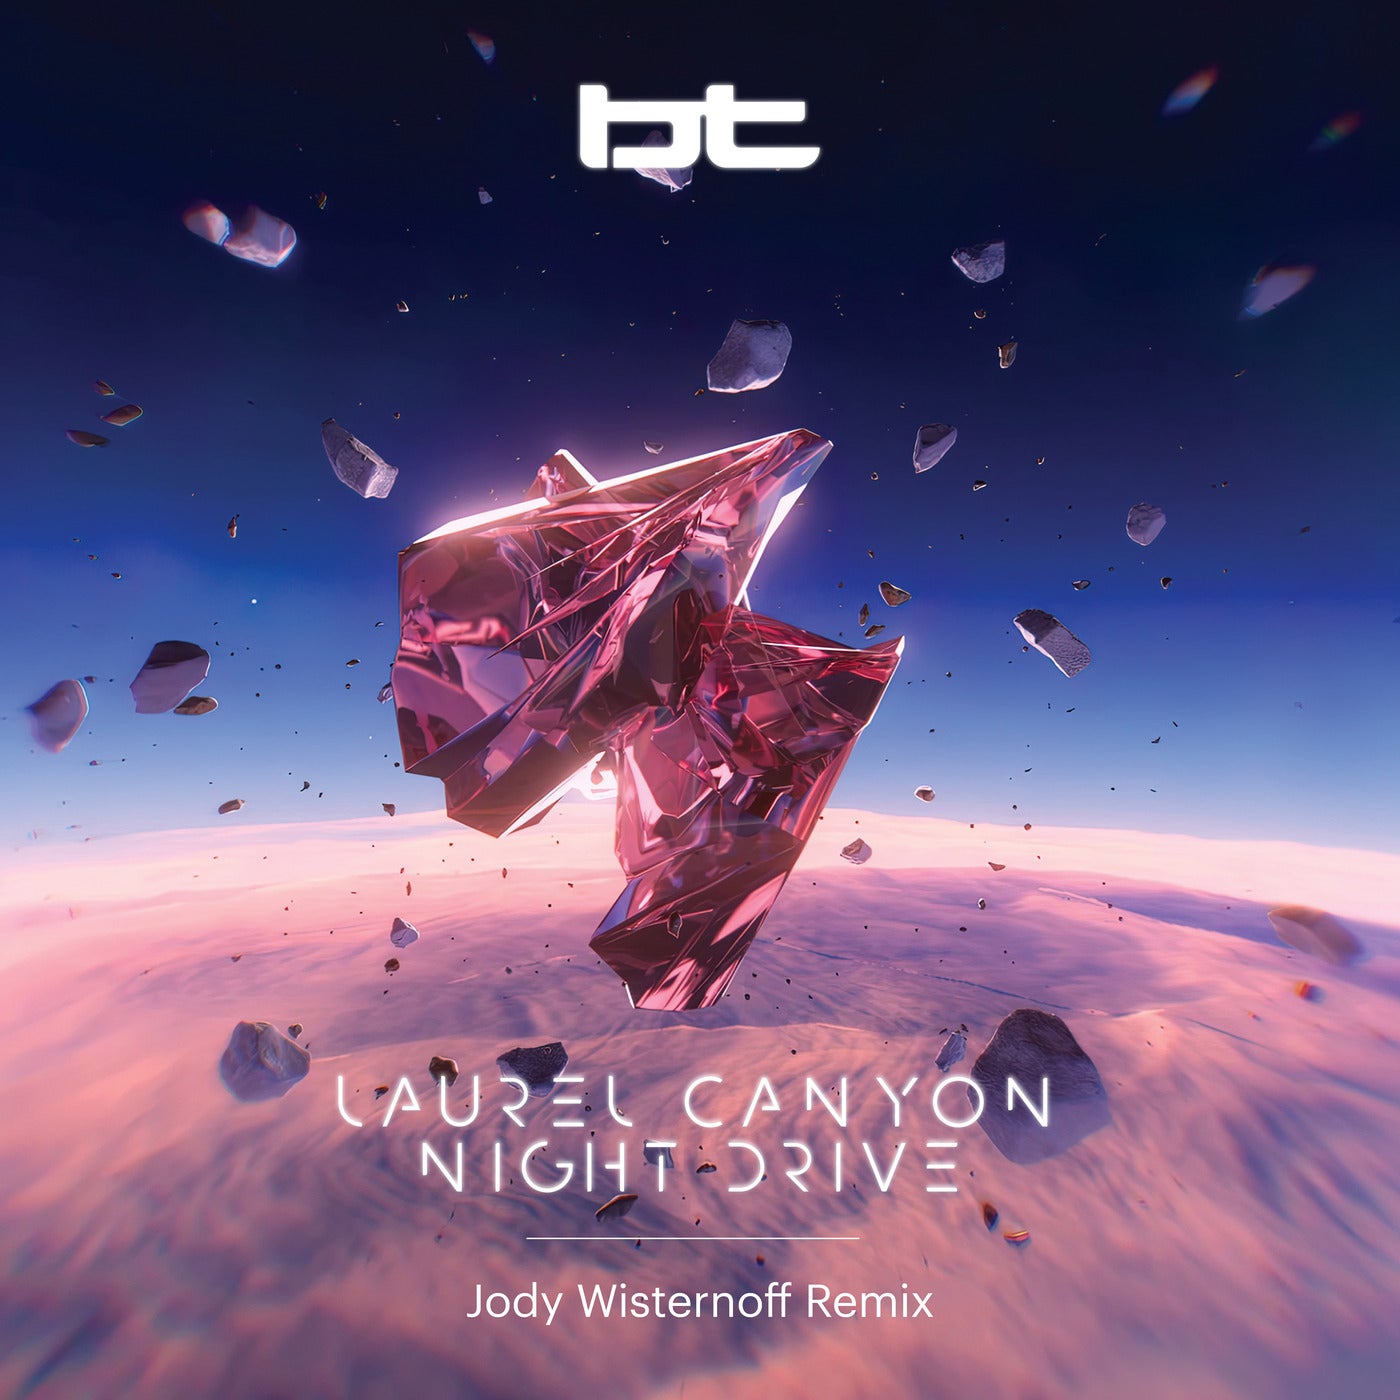 Breaks remix. BT – Laurel Canyon Night Drive (Jody Wisternoff Remixes). Jody Wisternoff.